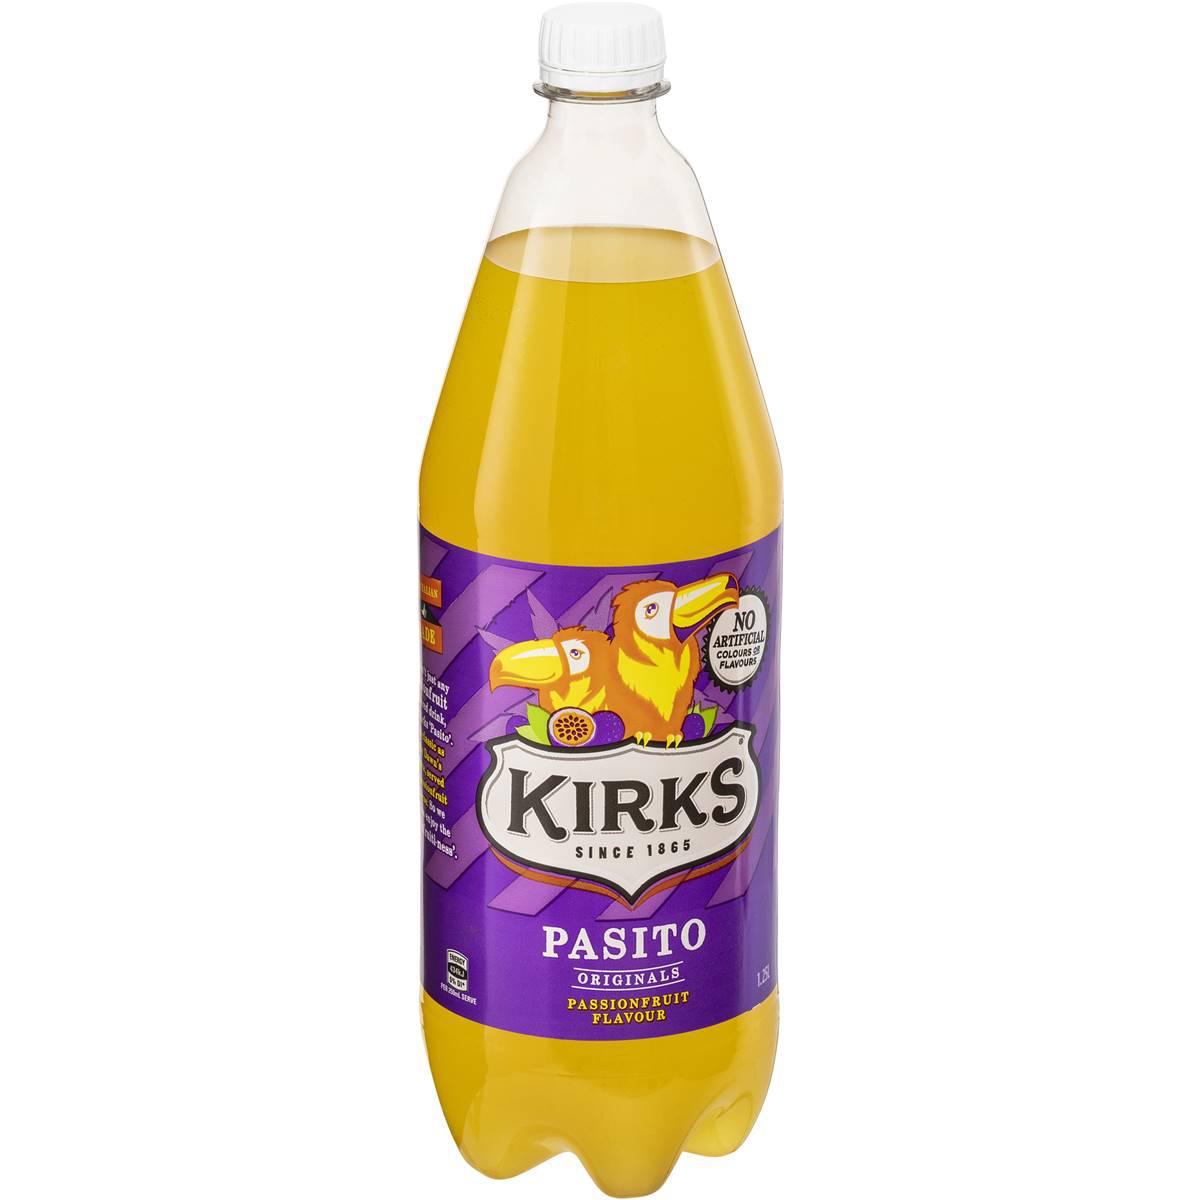 Kirks Pasito Soft Drink Bottle 1.25l